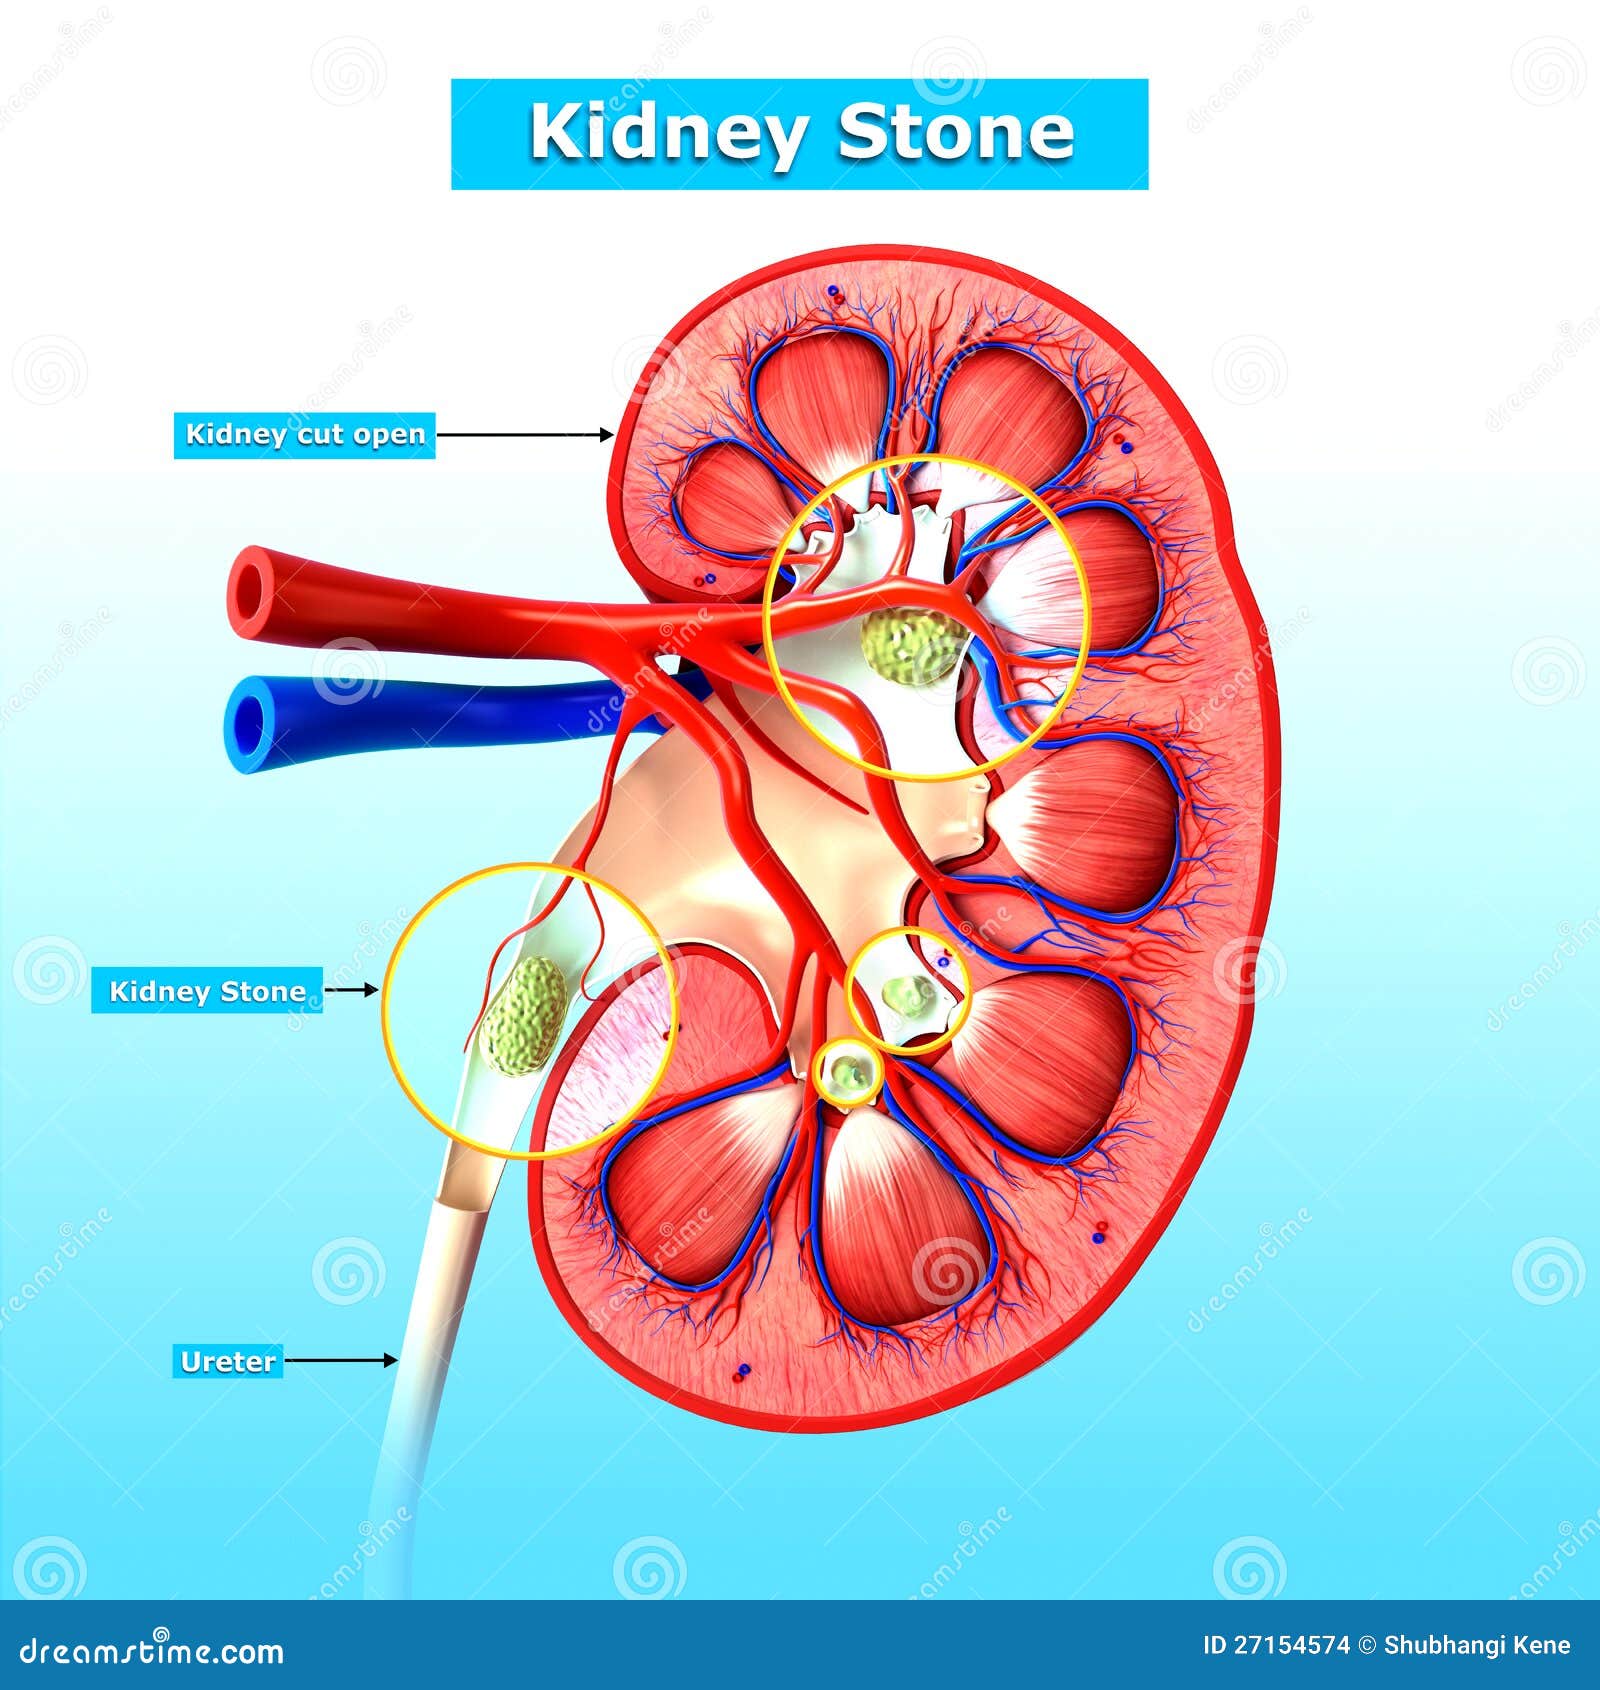 Kidney Stone Treatment Onboarding Screens Cartoon Vector